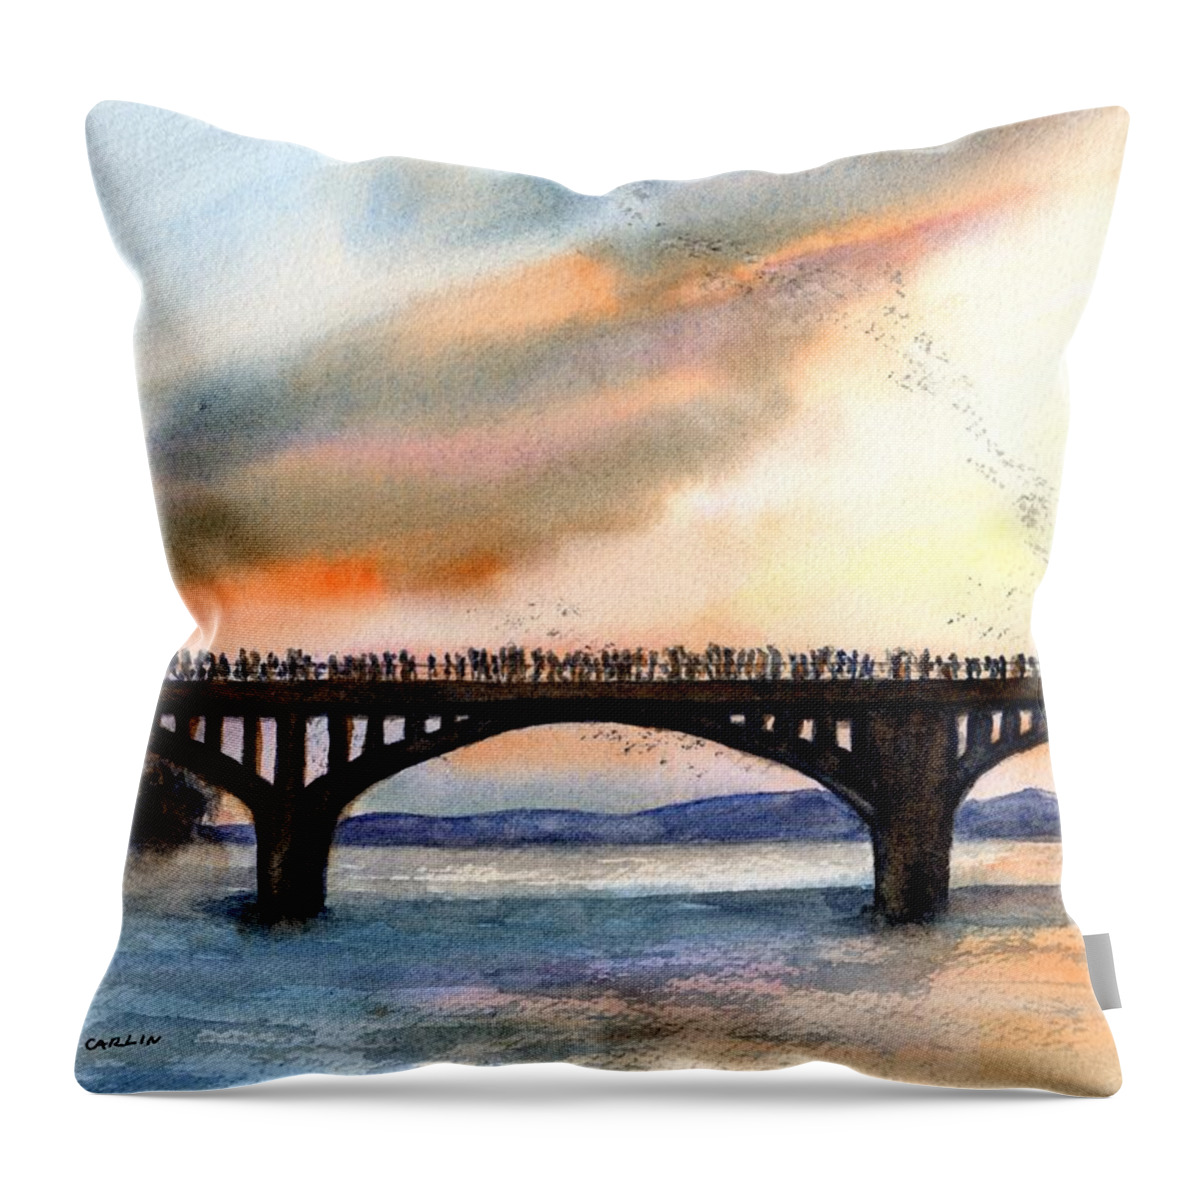 Austin Throw Pillow featuring the painting Austin, TX Congress Bridge Bats by Carlin Blahnik CarlinArtWatercolor